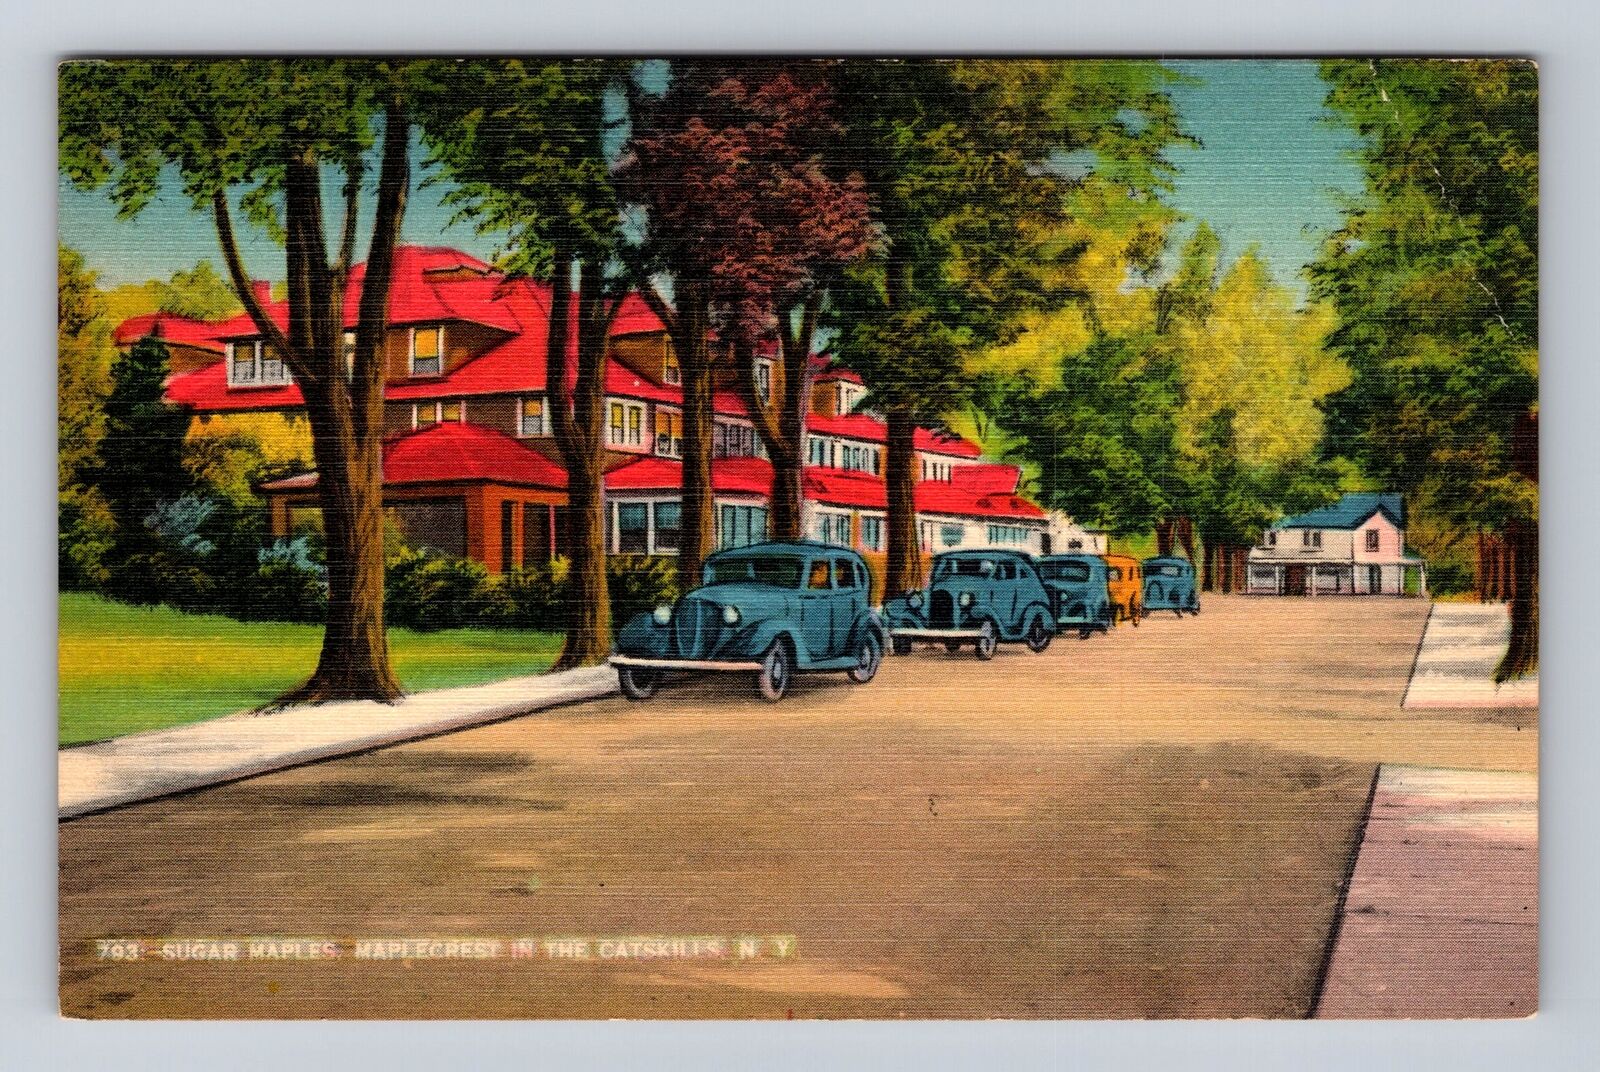 Maplecrest NY-New York, Catskill Mts, Street Lined Sugar Maples Vintage Postcard